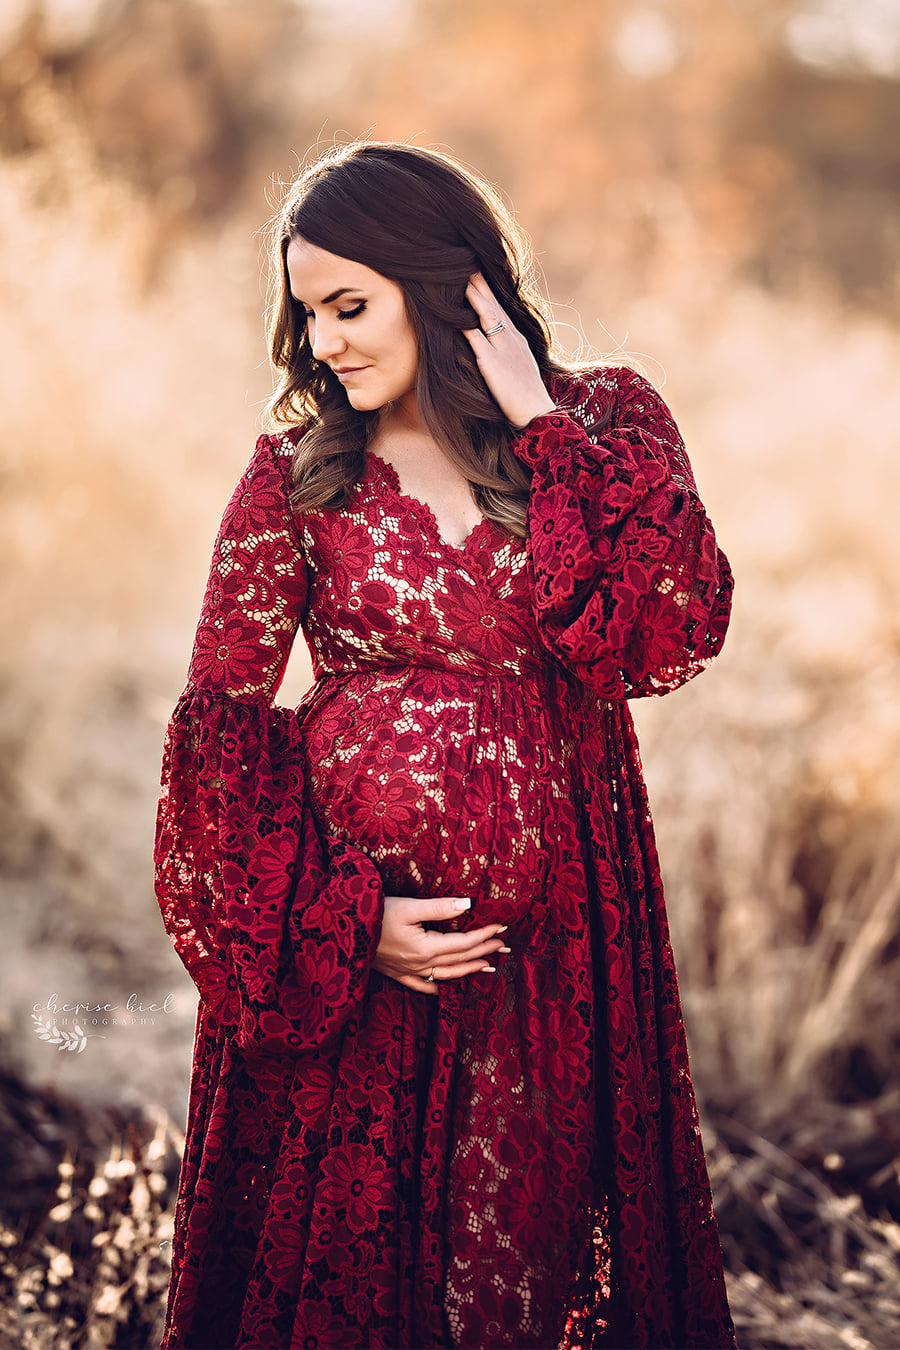 Red Lace Sunflower Dress - maternity photoshoot dress